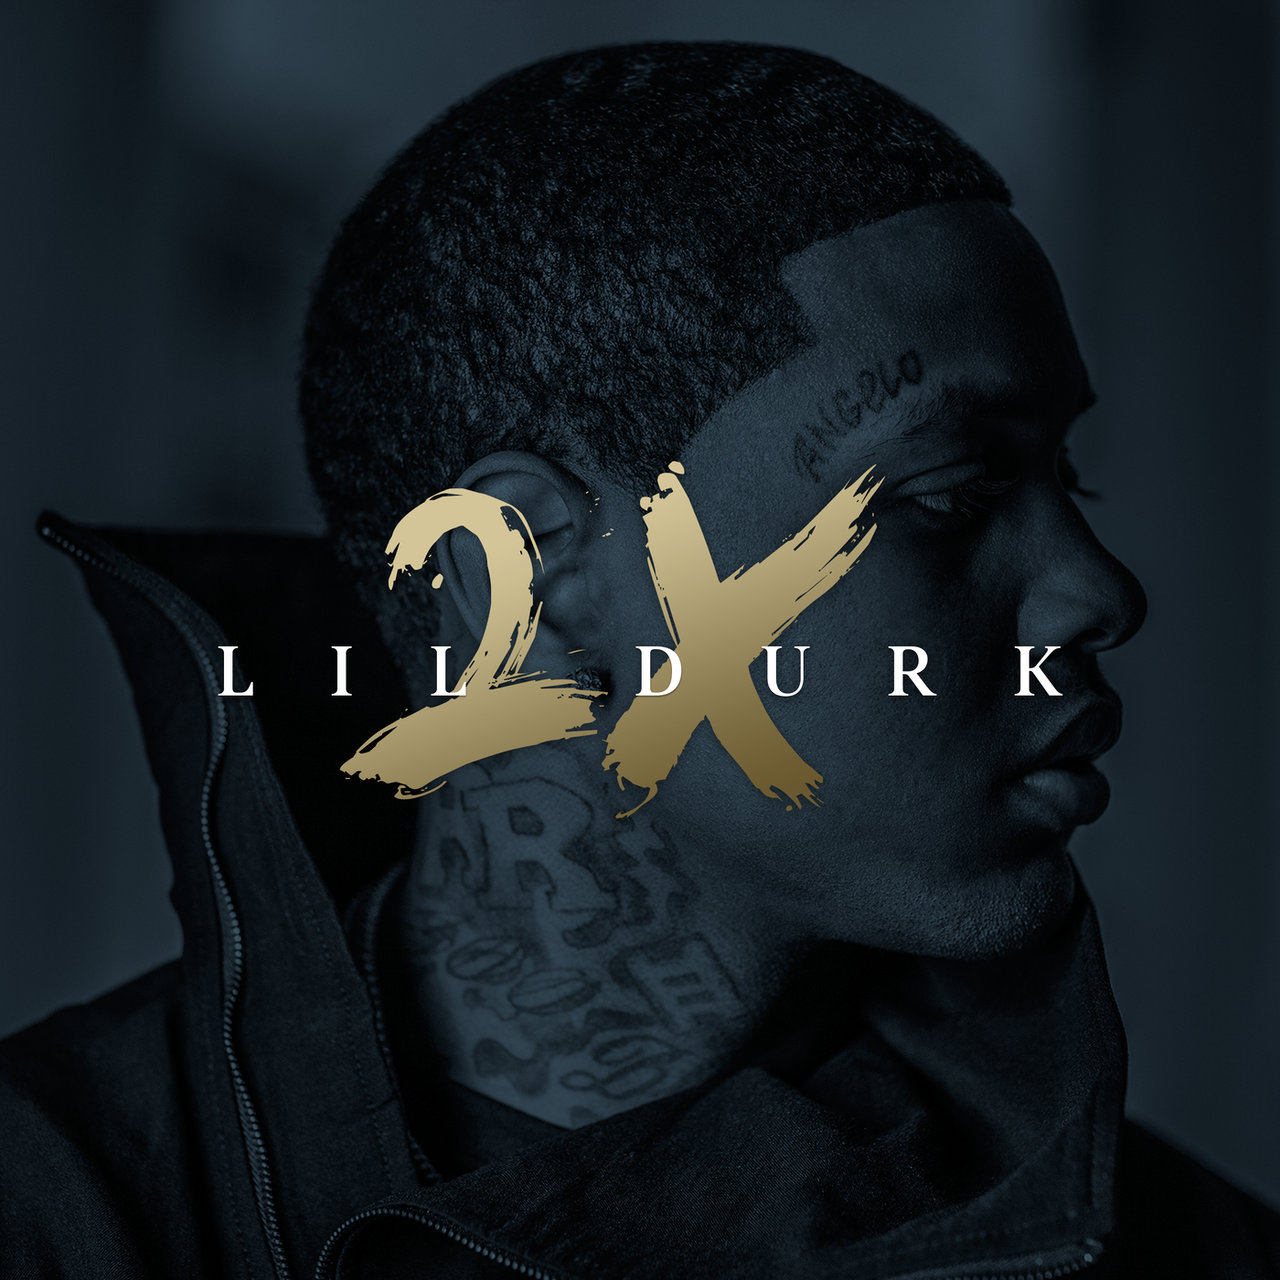 Lil Durk 2X (Deluxe) [2016]